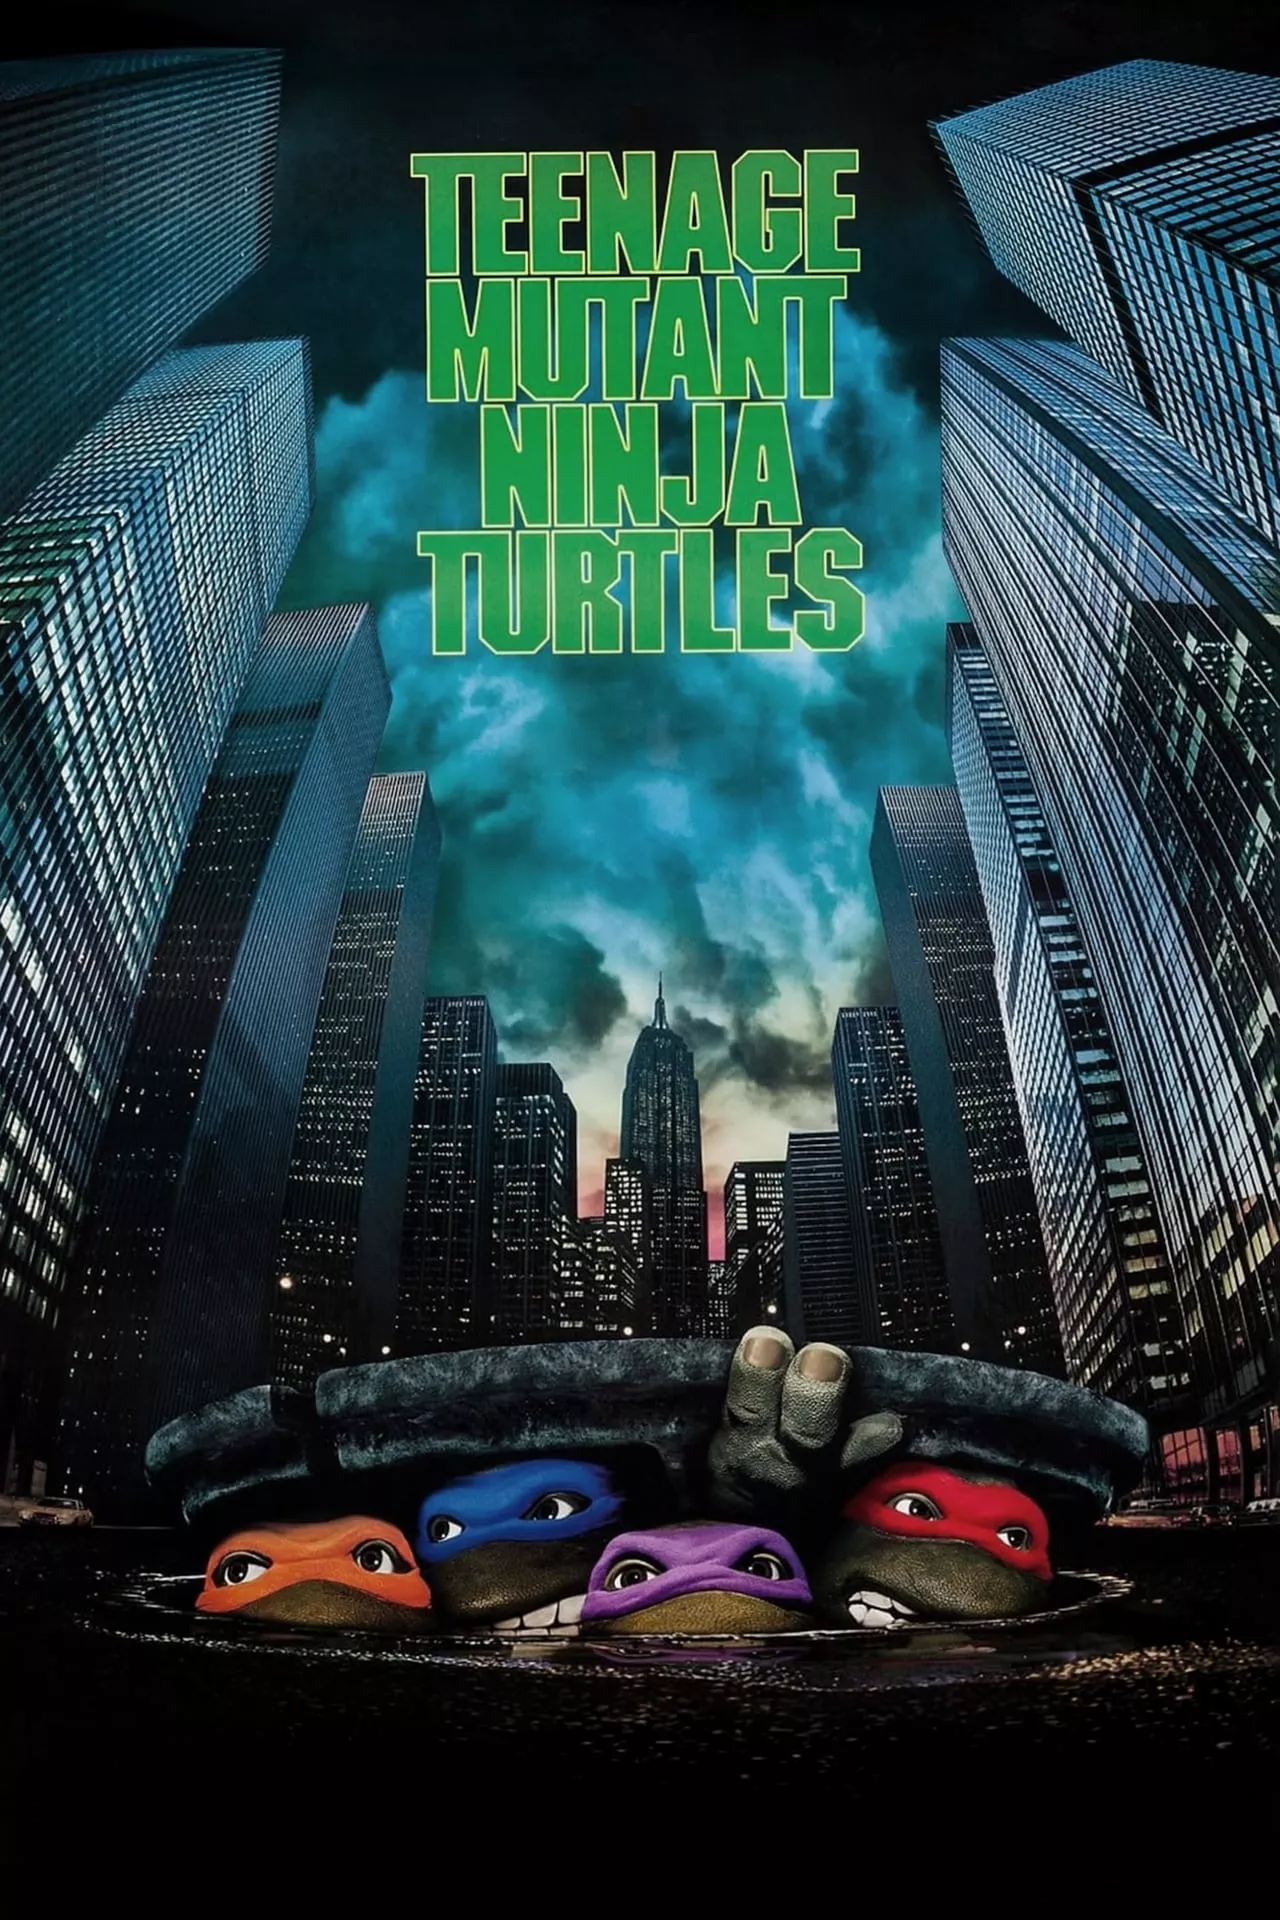 Teenage Mutant Ninja Turtles (1990) ขบวนการ​มุดดิน​ นินจาเต่า